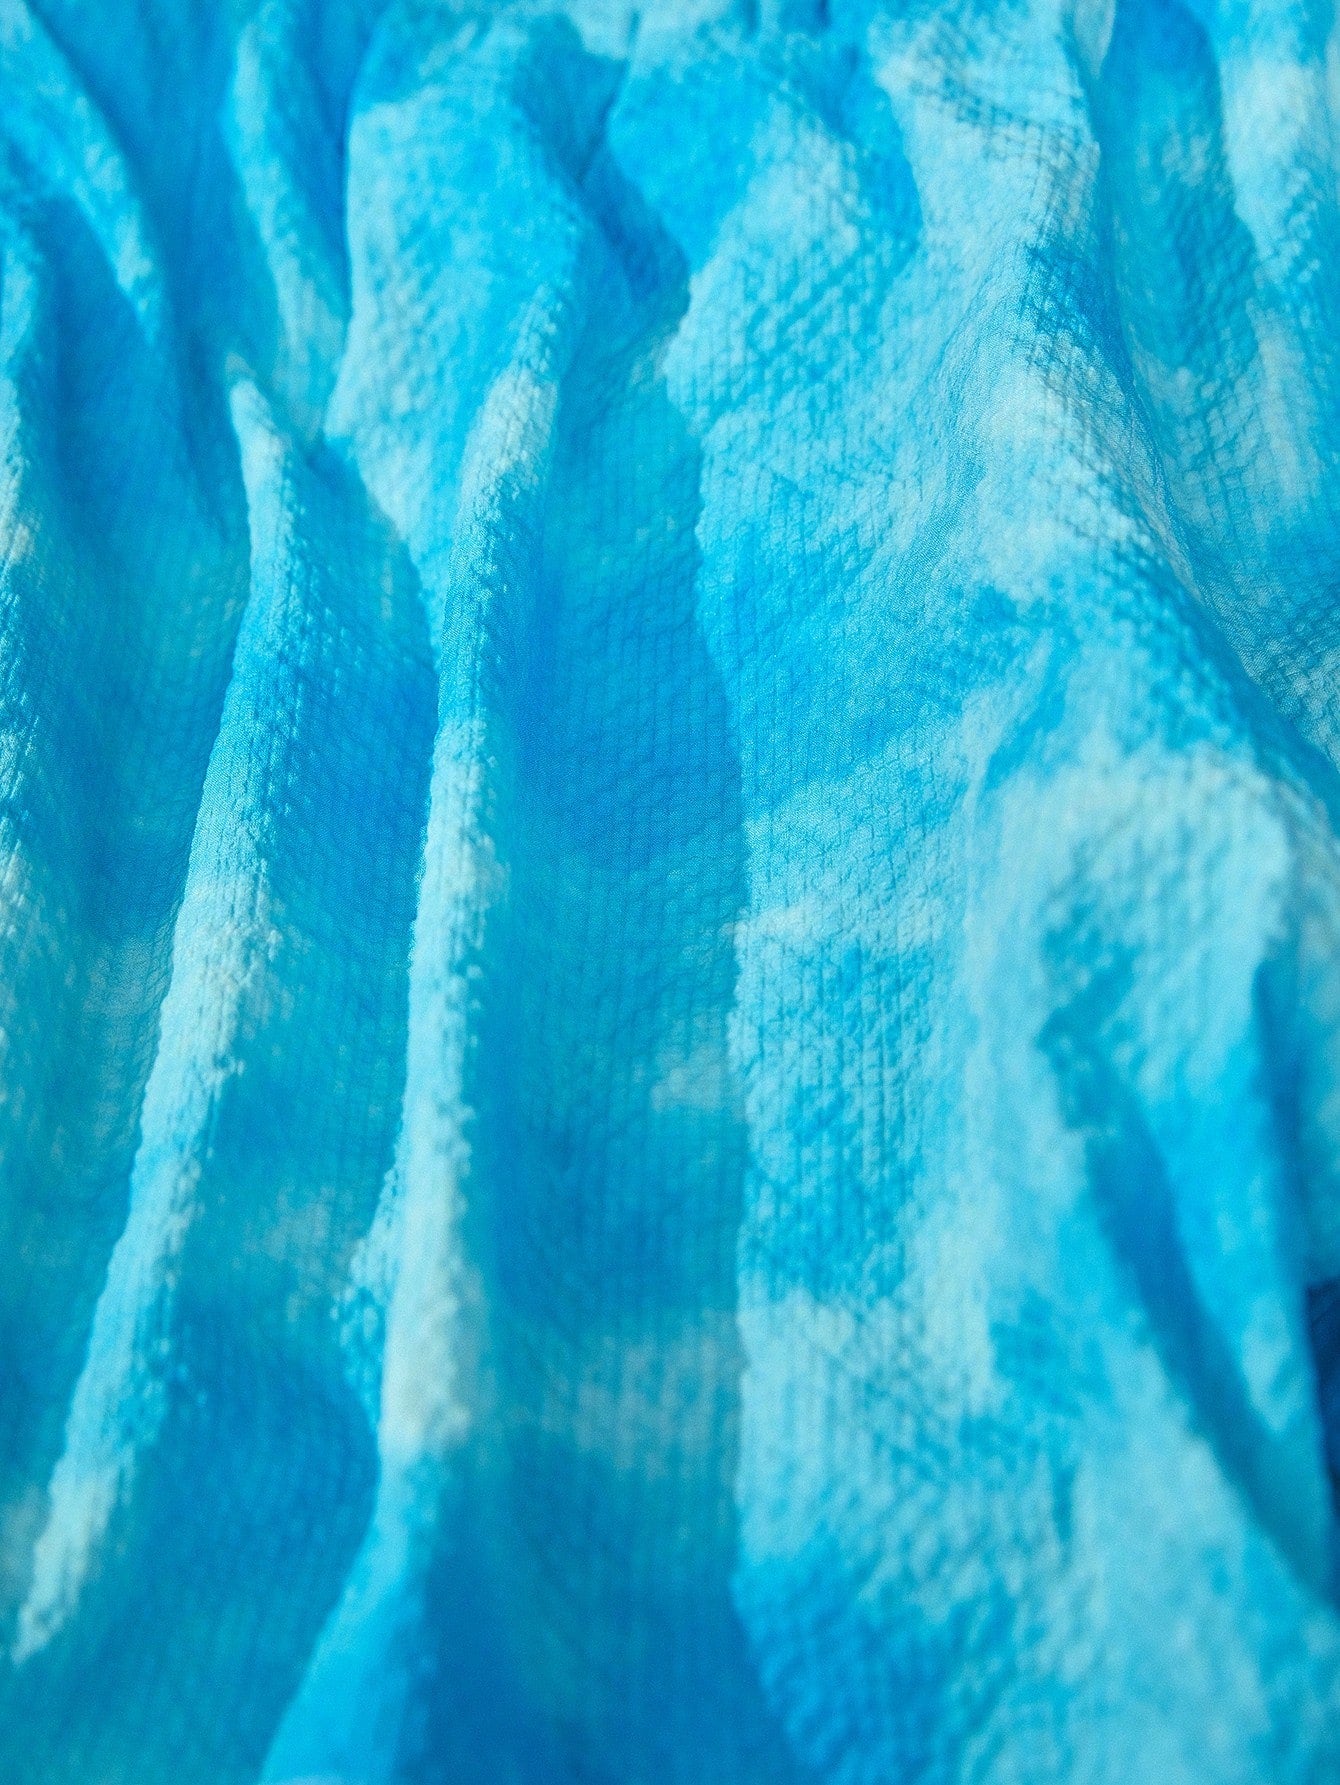 Unisex Tie-Dye Beach Shorts - Boho Tropical Print, Pockets, 100% Polyester, Machine Washable